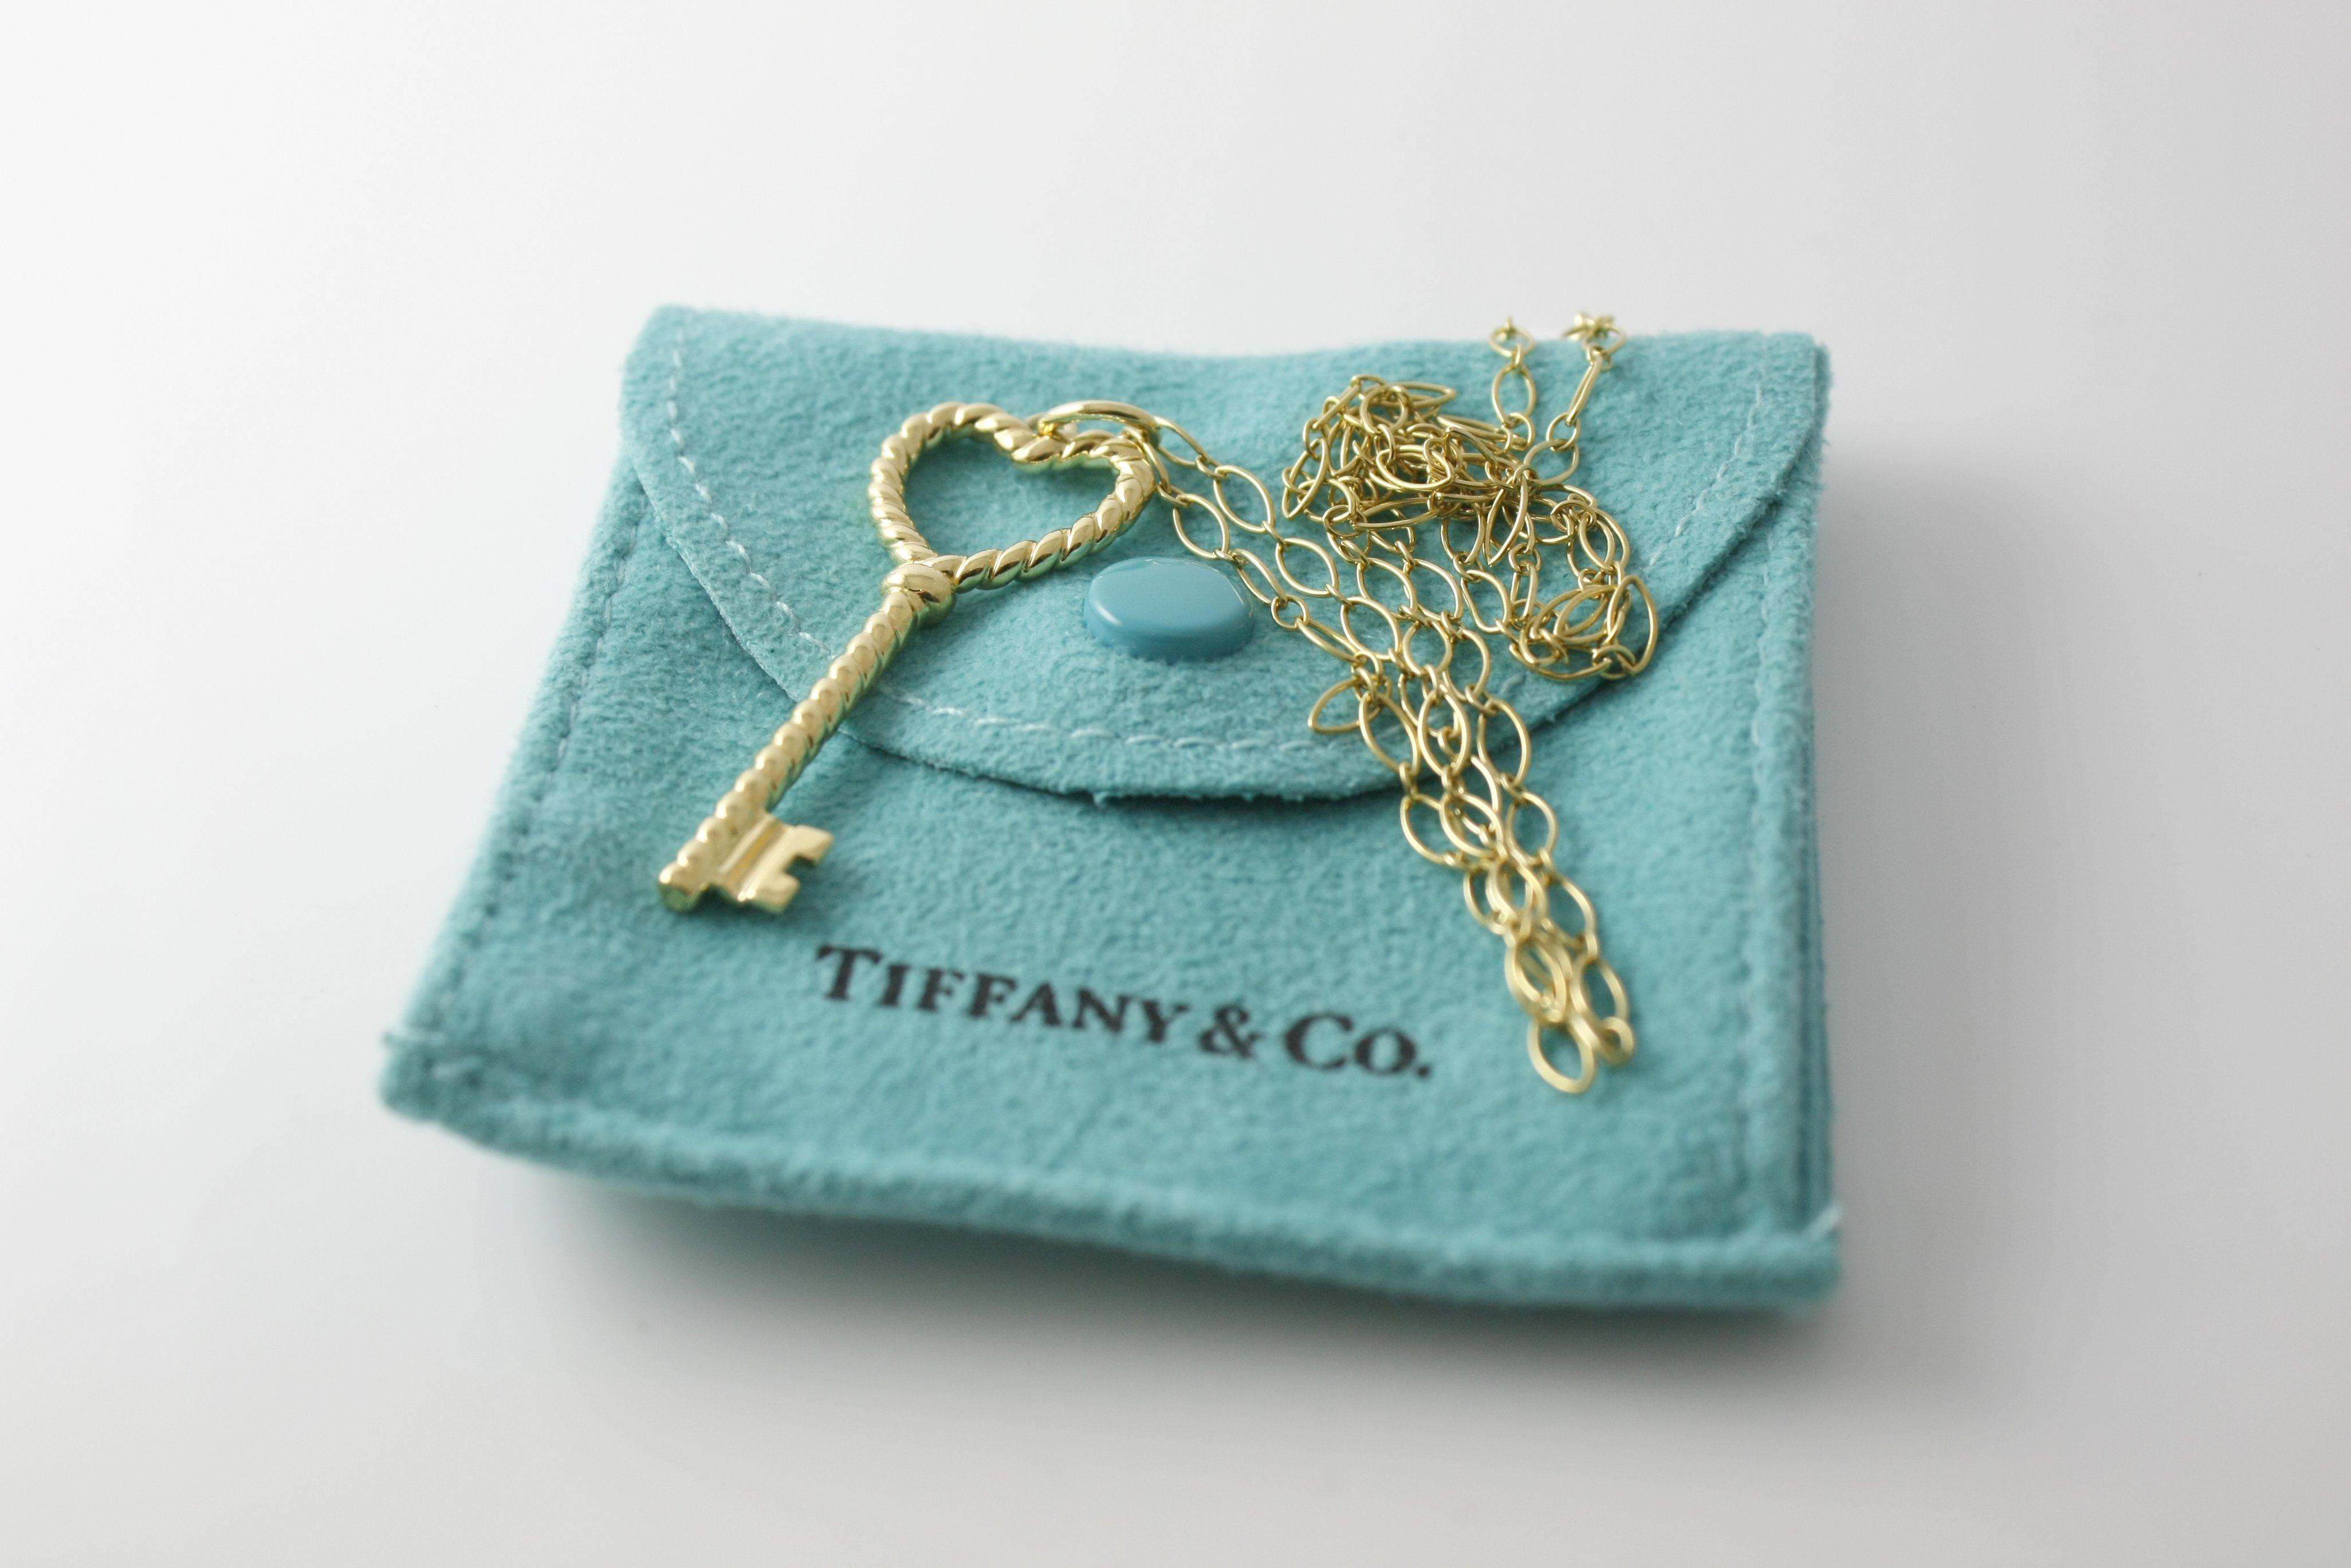 Tiffany & Co. Twist Heart Key Pendant Necklace - $750